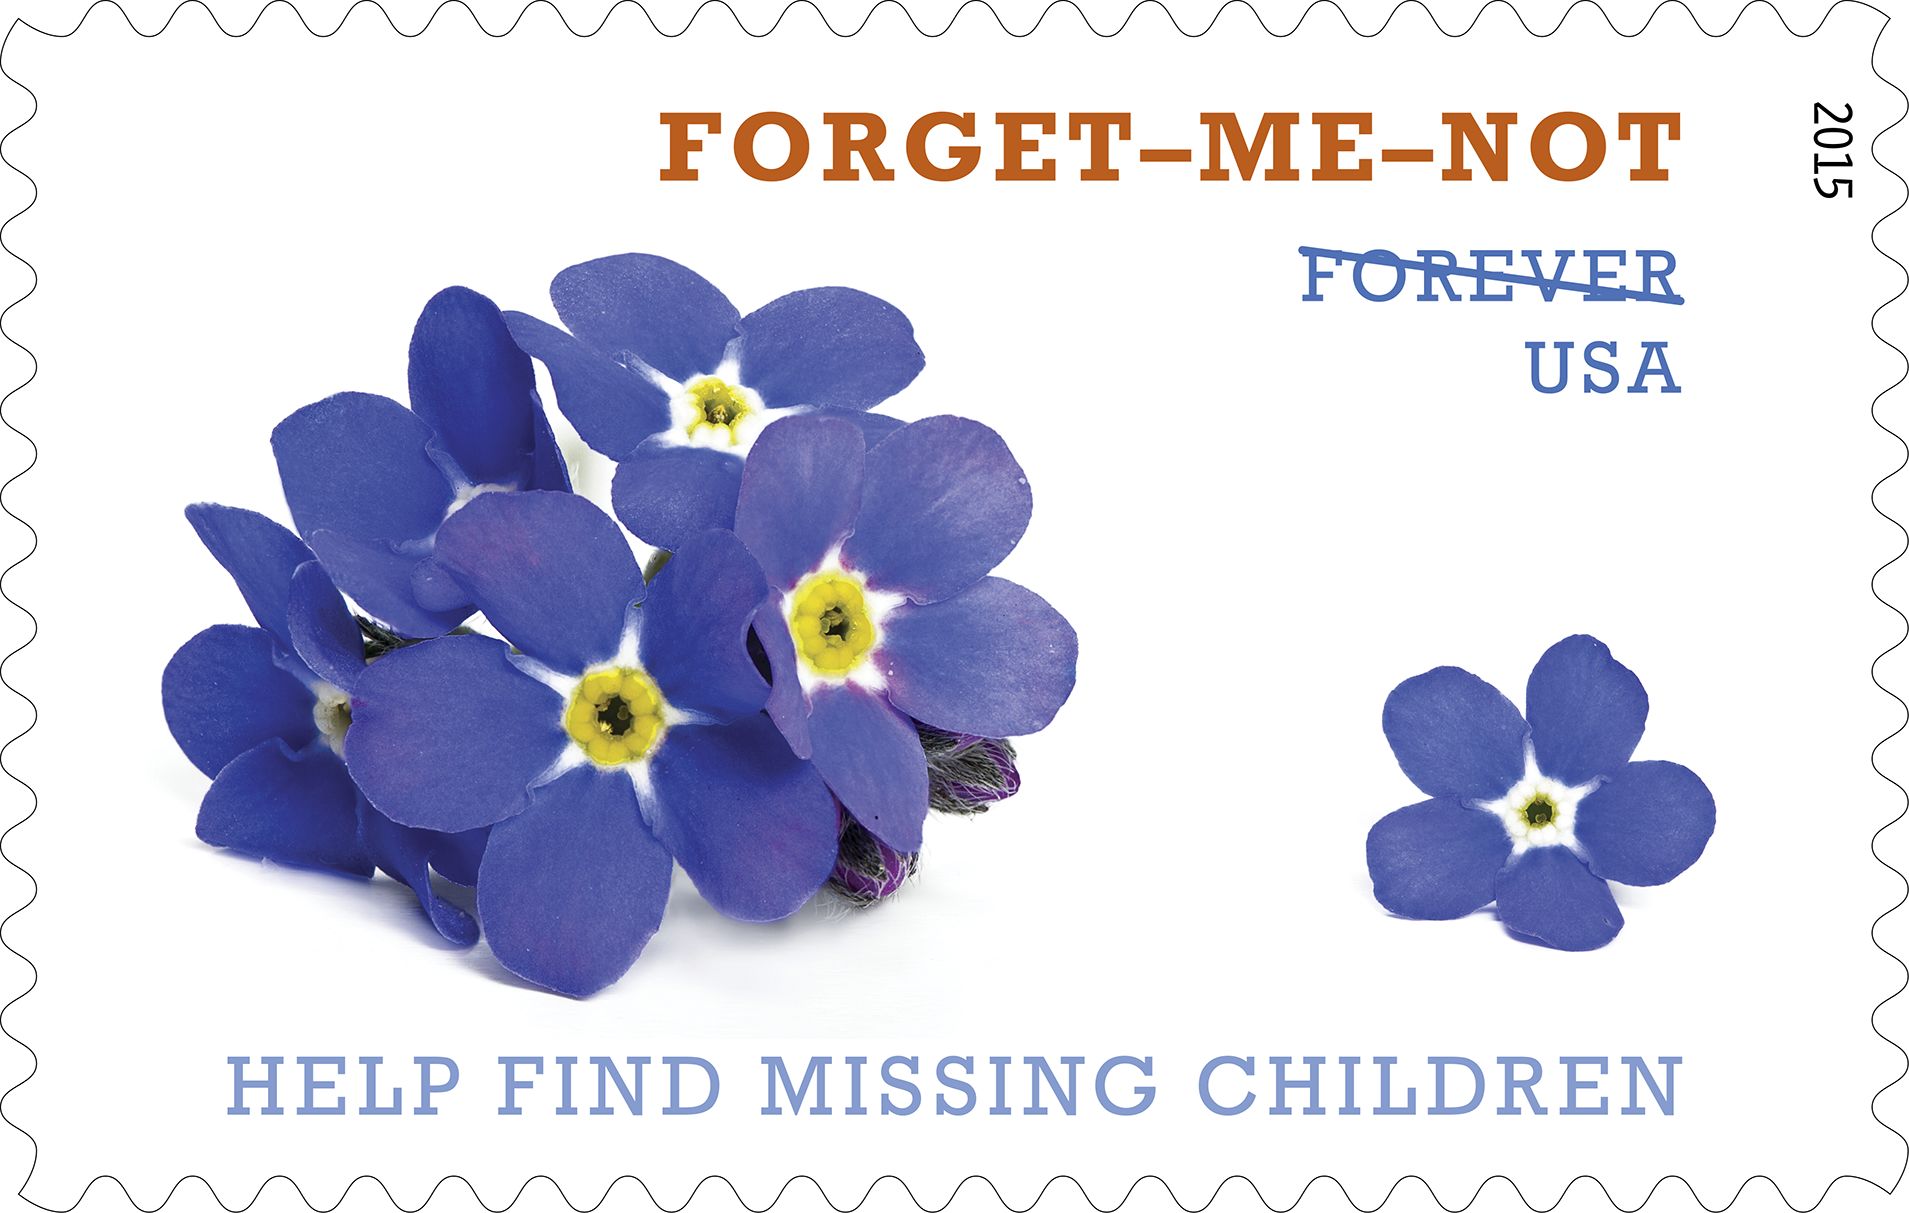 Forget-Me-Not Forever Stamp 2015, Help Find Missing Children